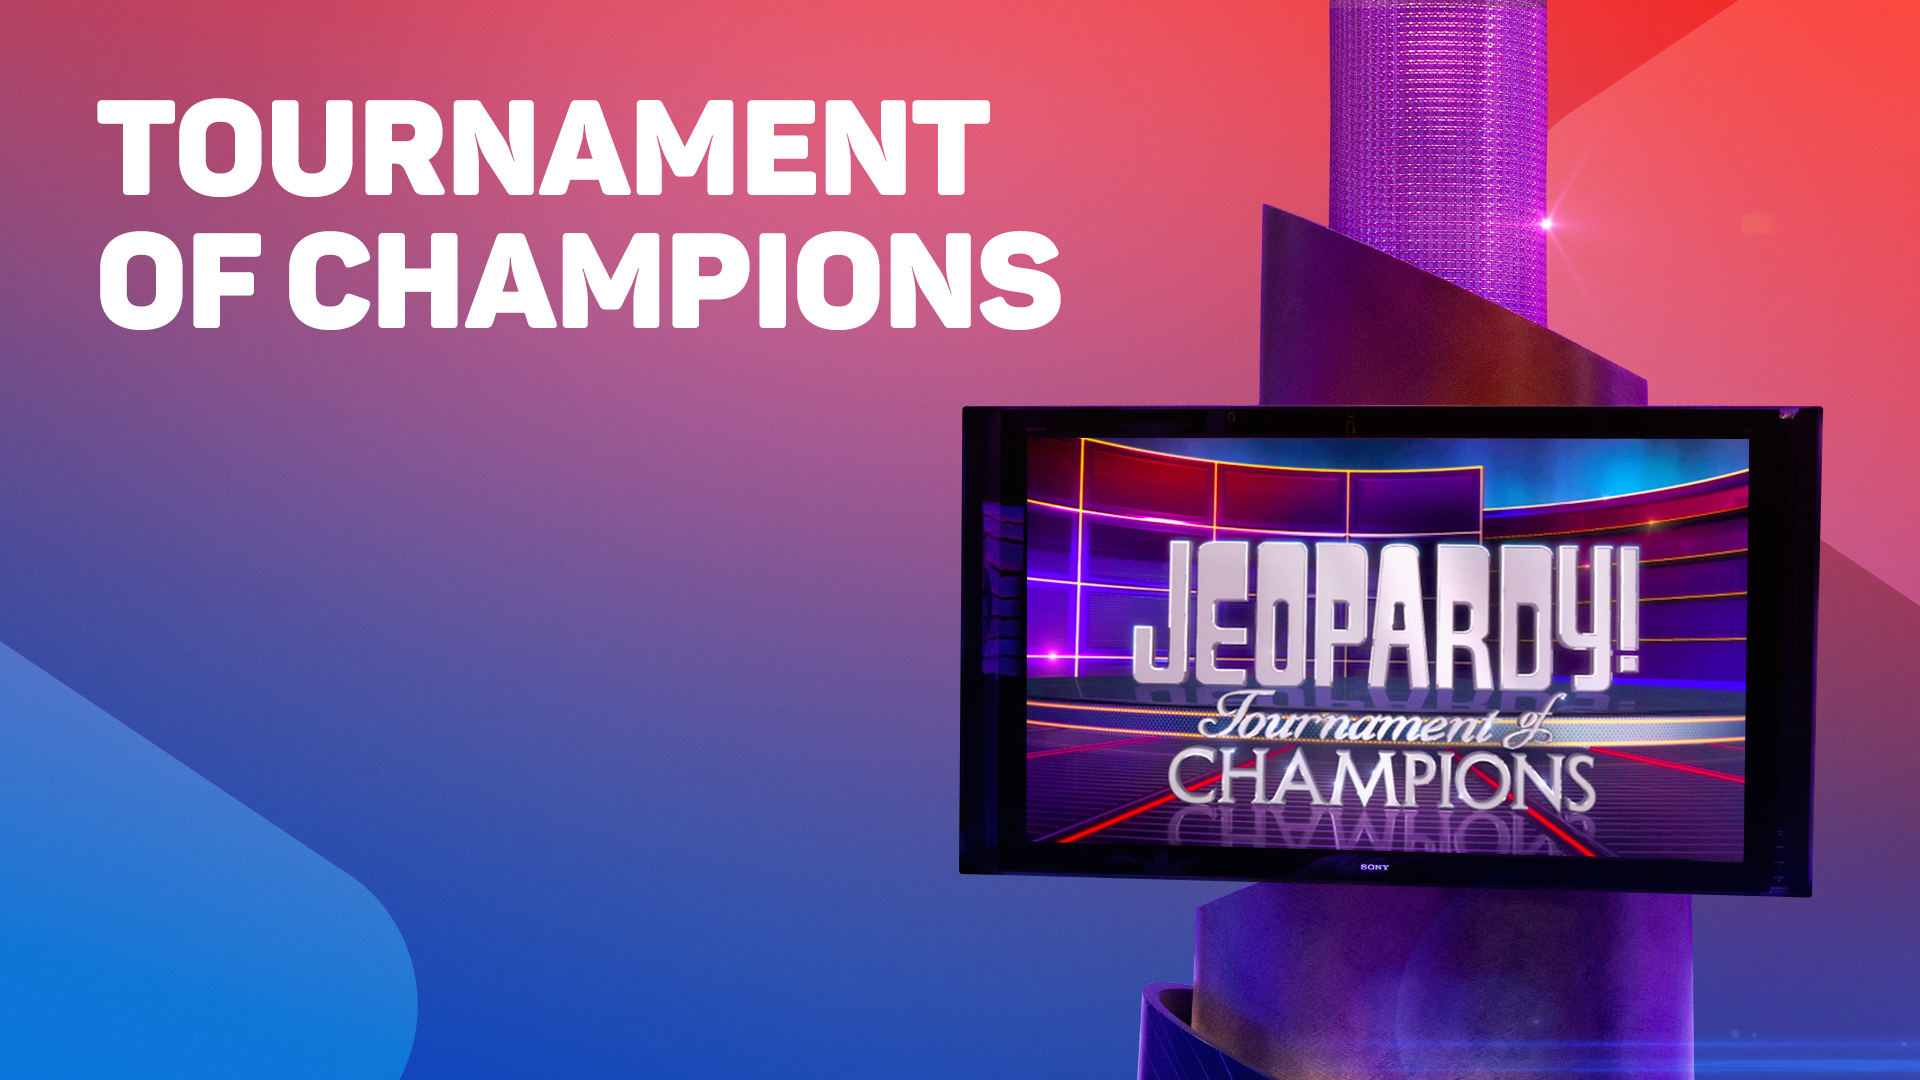 Jeopardy! PlayShow: Tournament of Champions